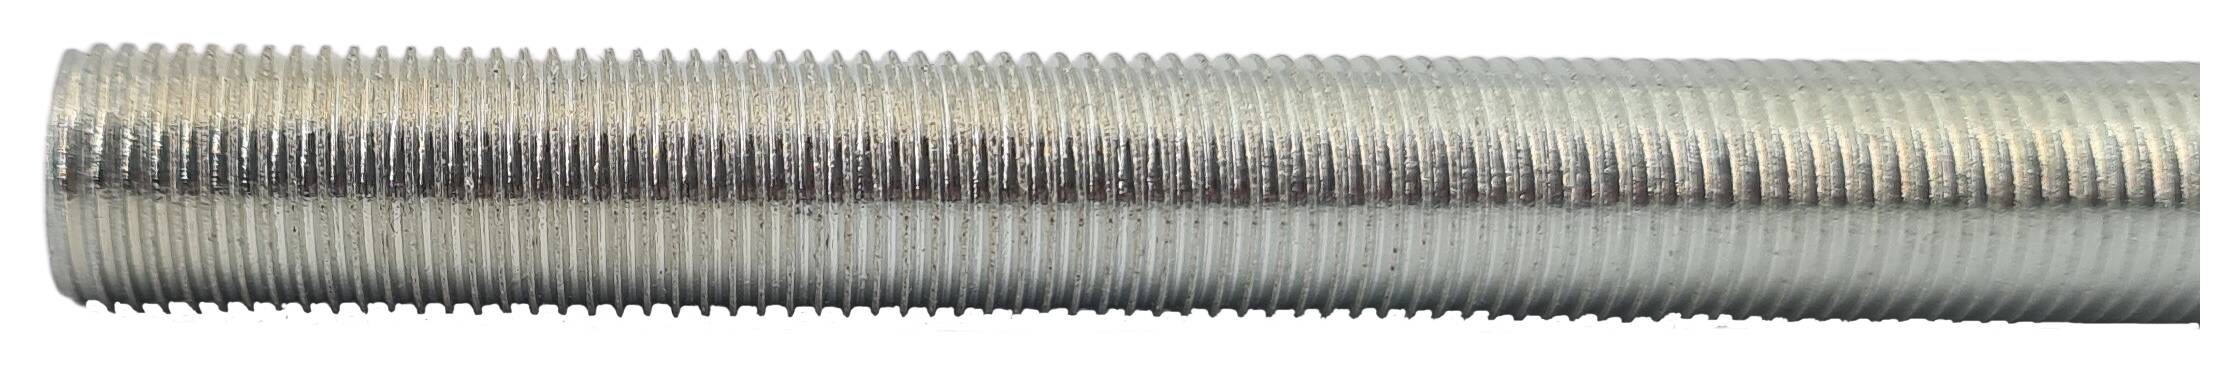 iron thread tube M10x1x305 round zinc